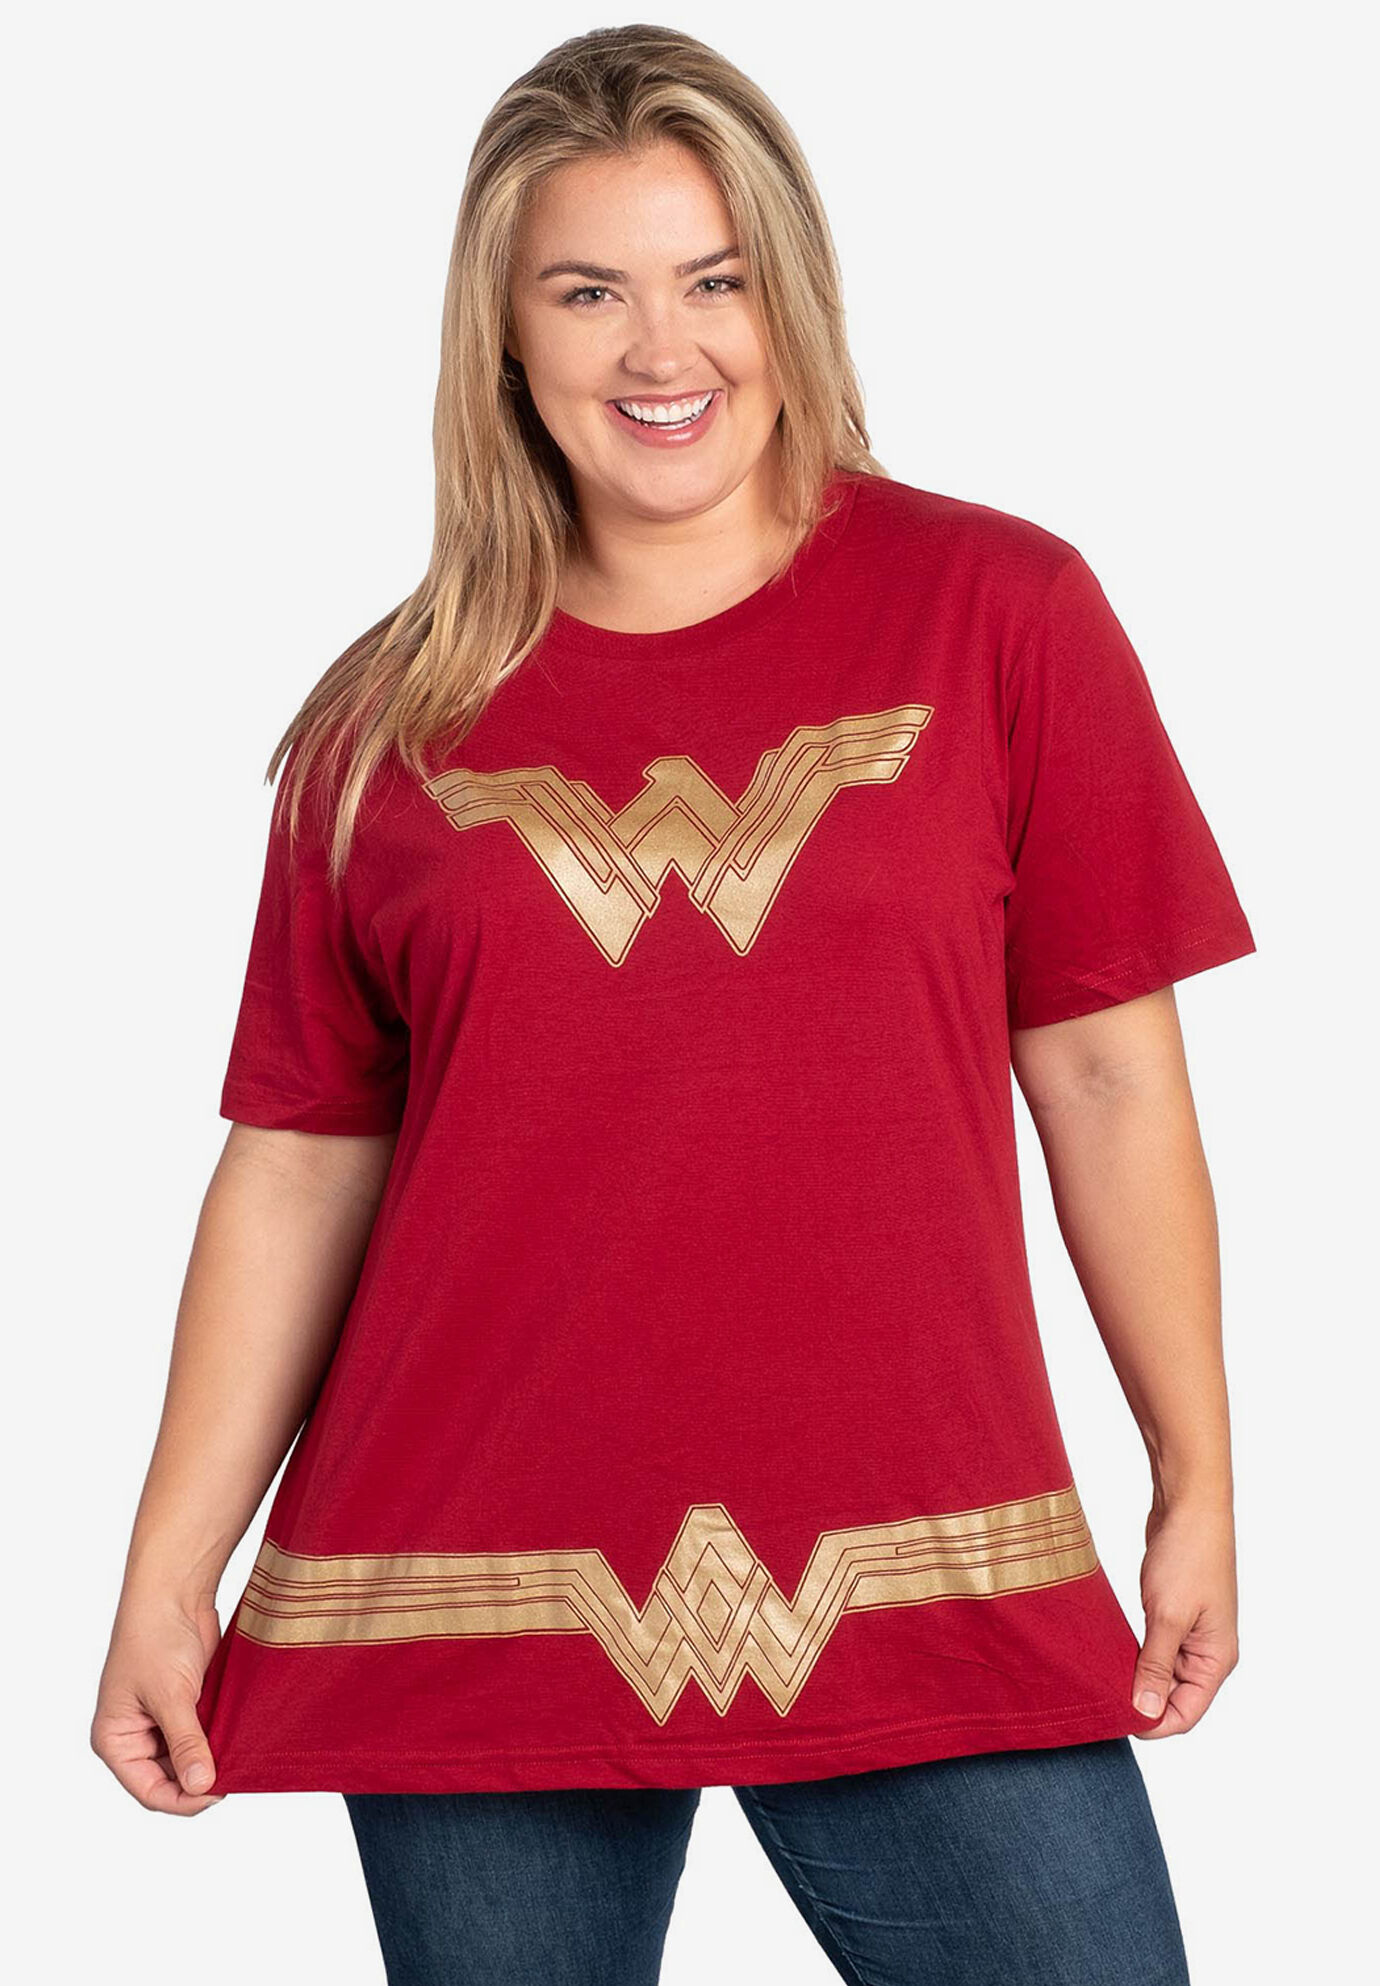 Plus Size Women's DC Comics Wonder Woman Logo & Belt T-Shirt by DC Comics in Red (Size 2X (18-20))